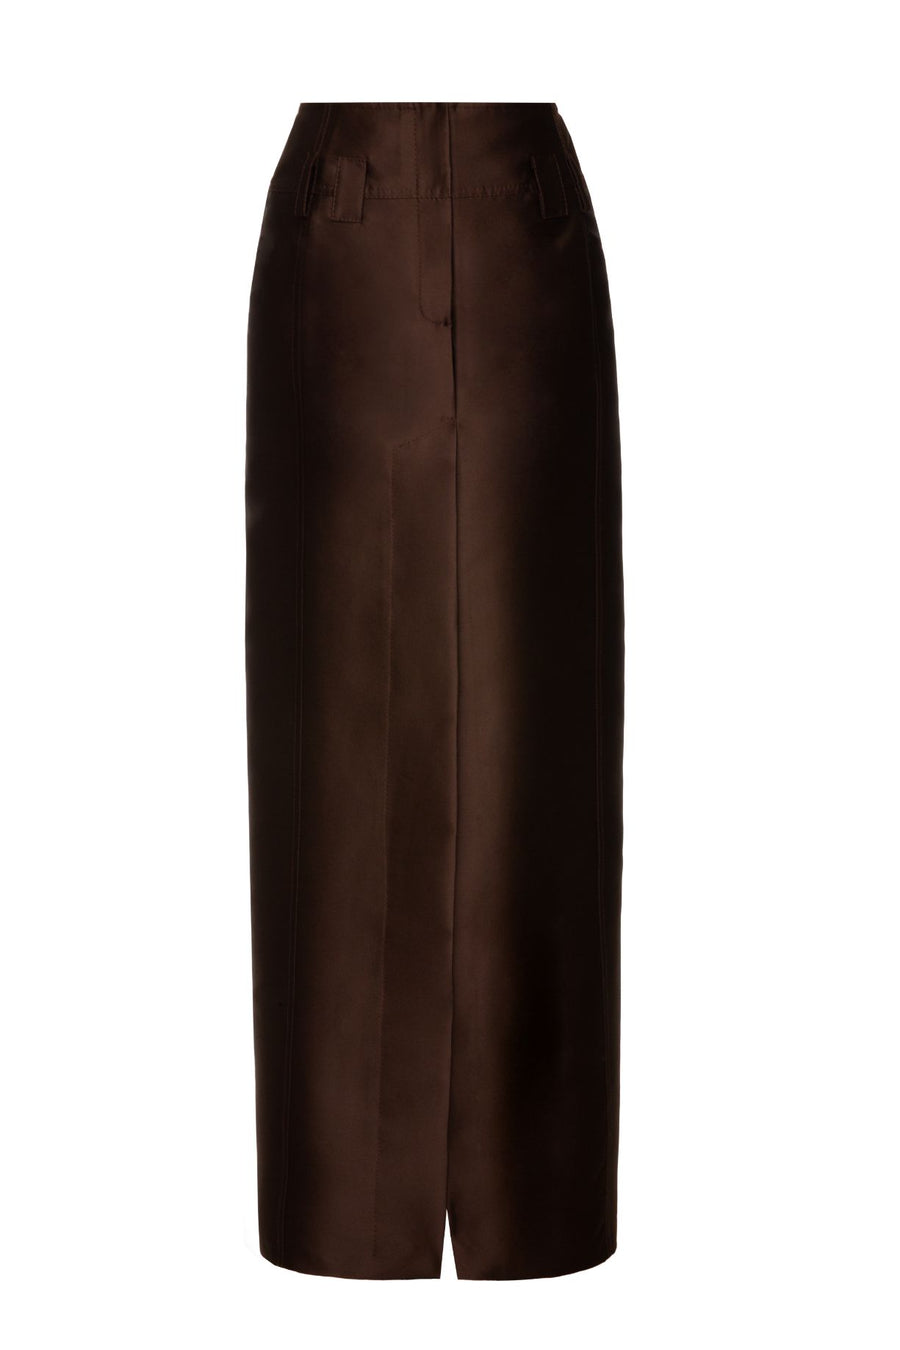 Linda Chocolate Skirt